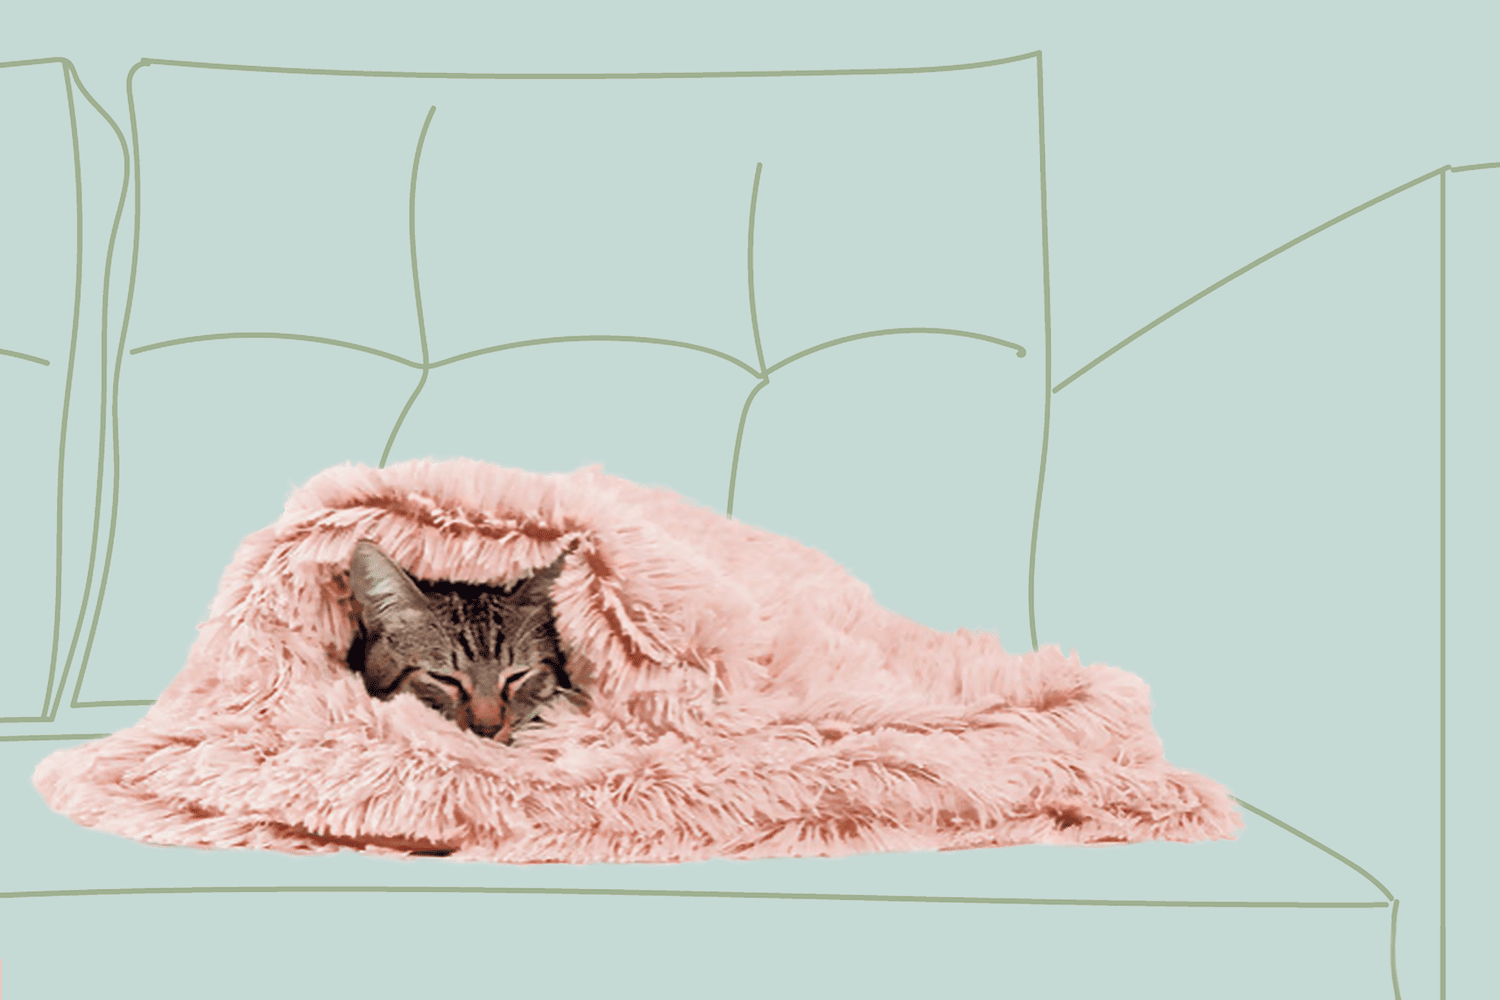 Cat snuggled in shag throw blanket